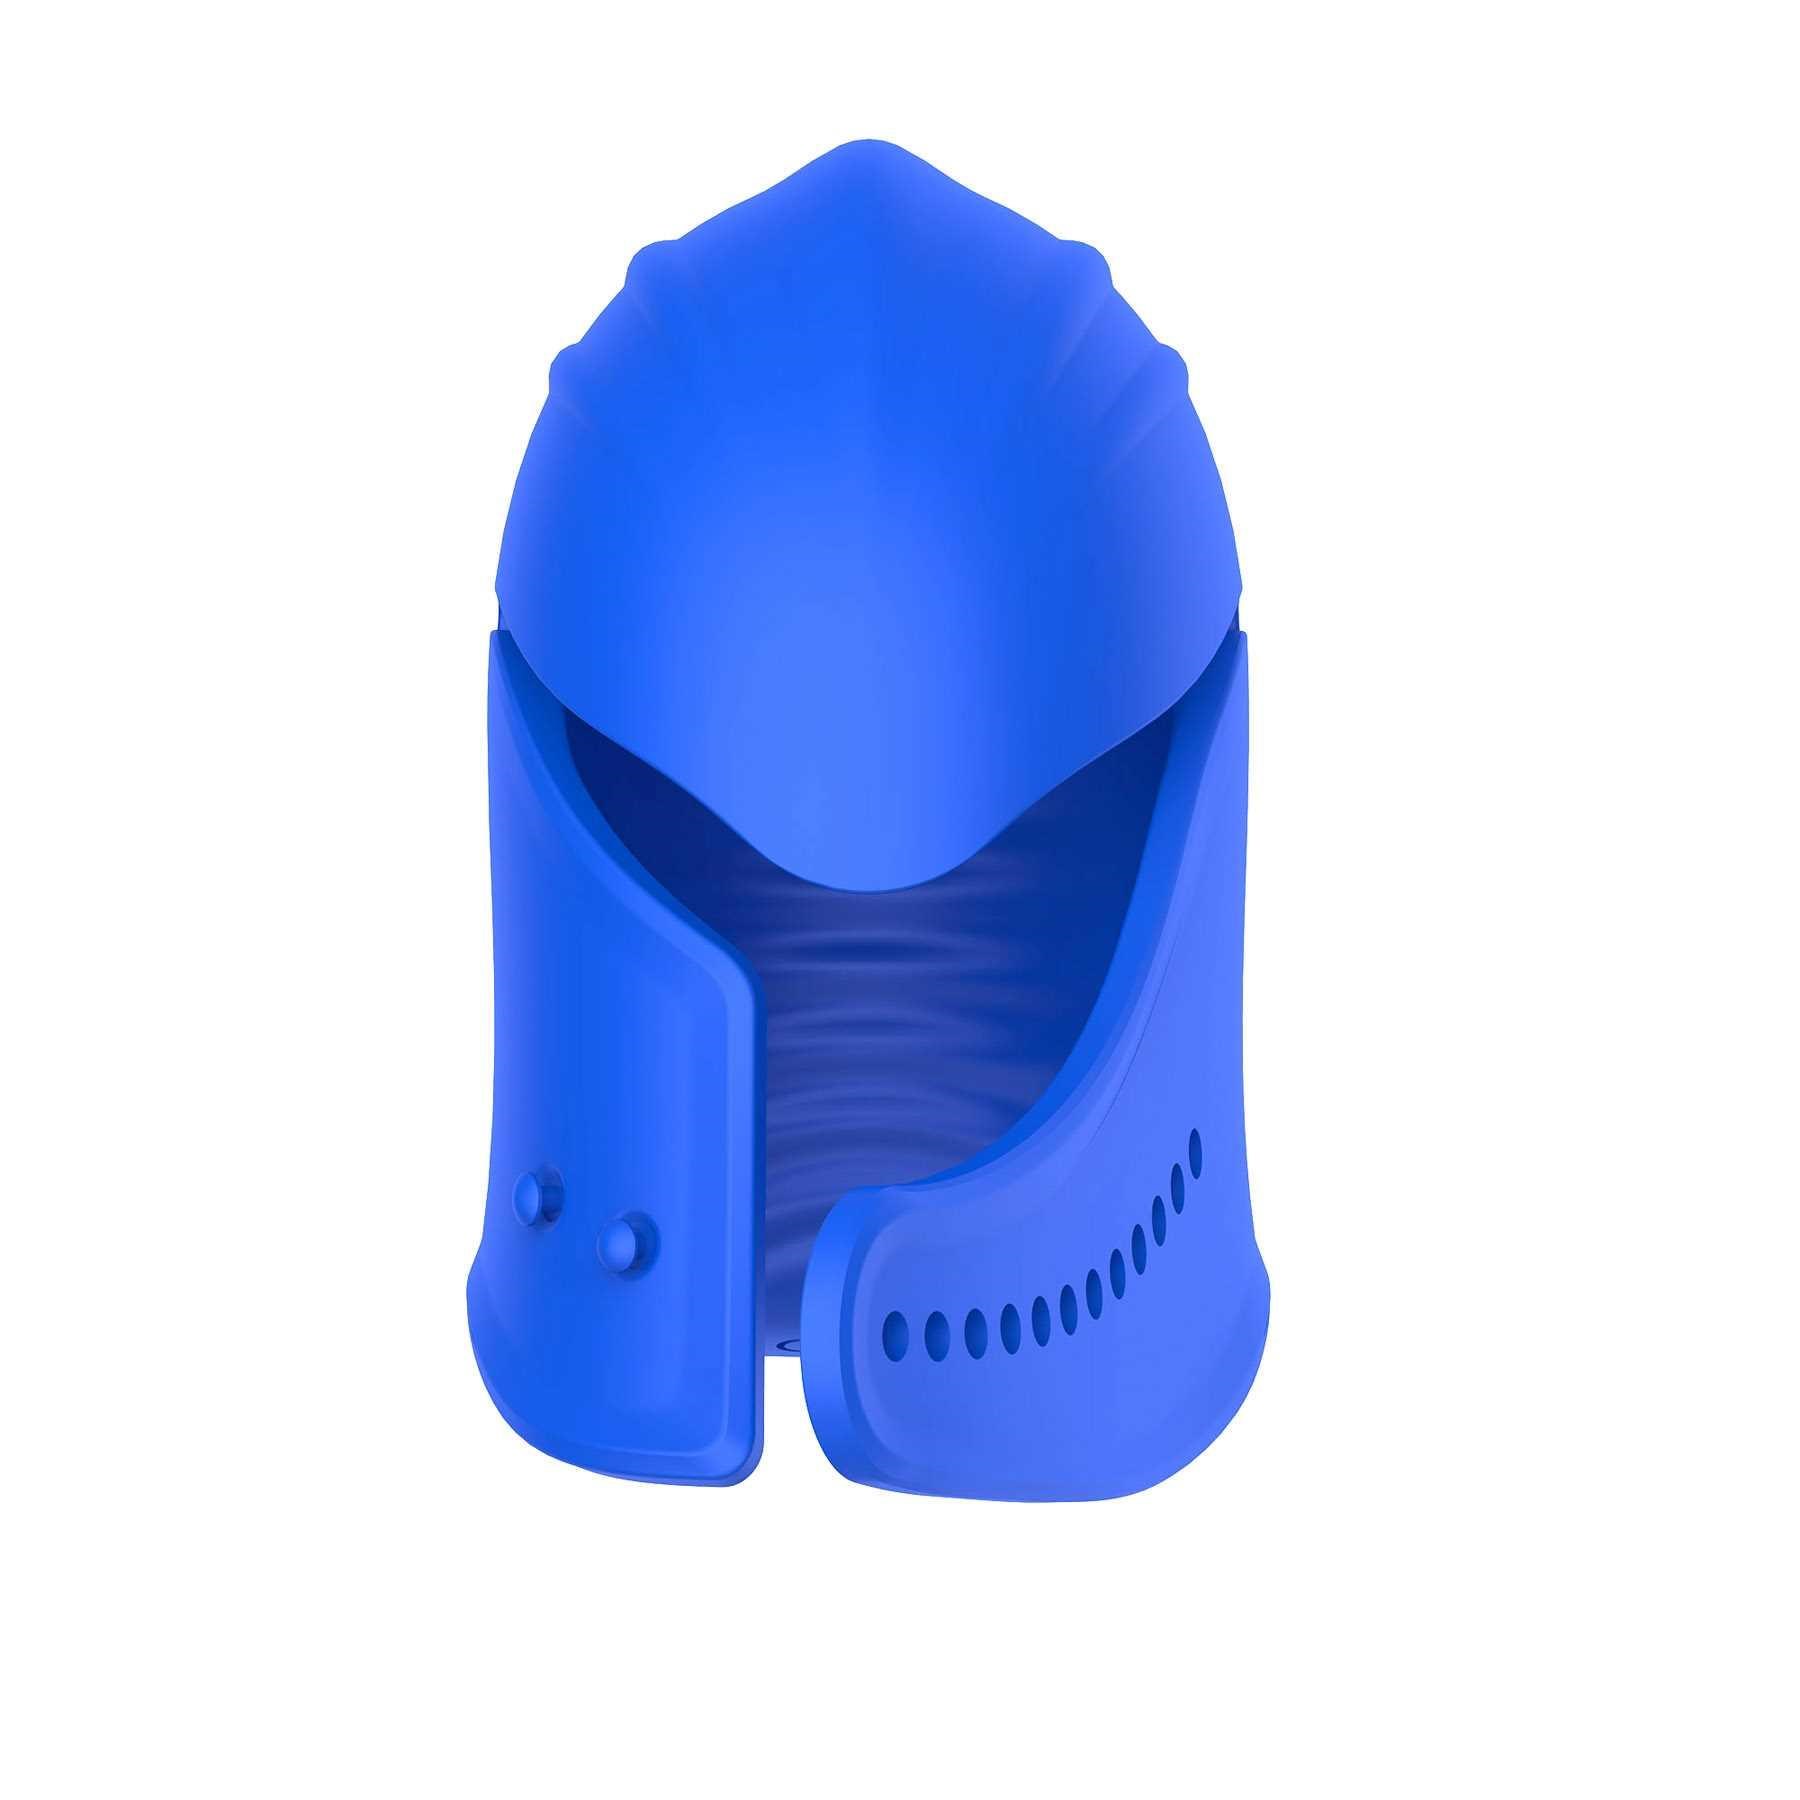 Gladiator Tip Vibrator blue